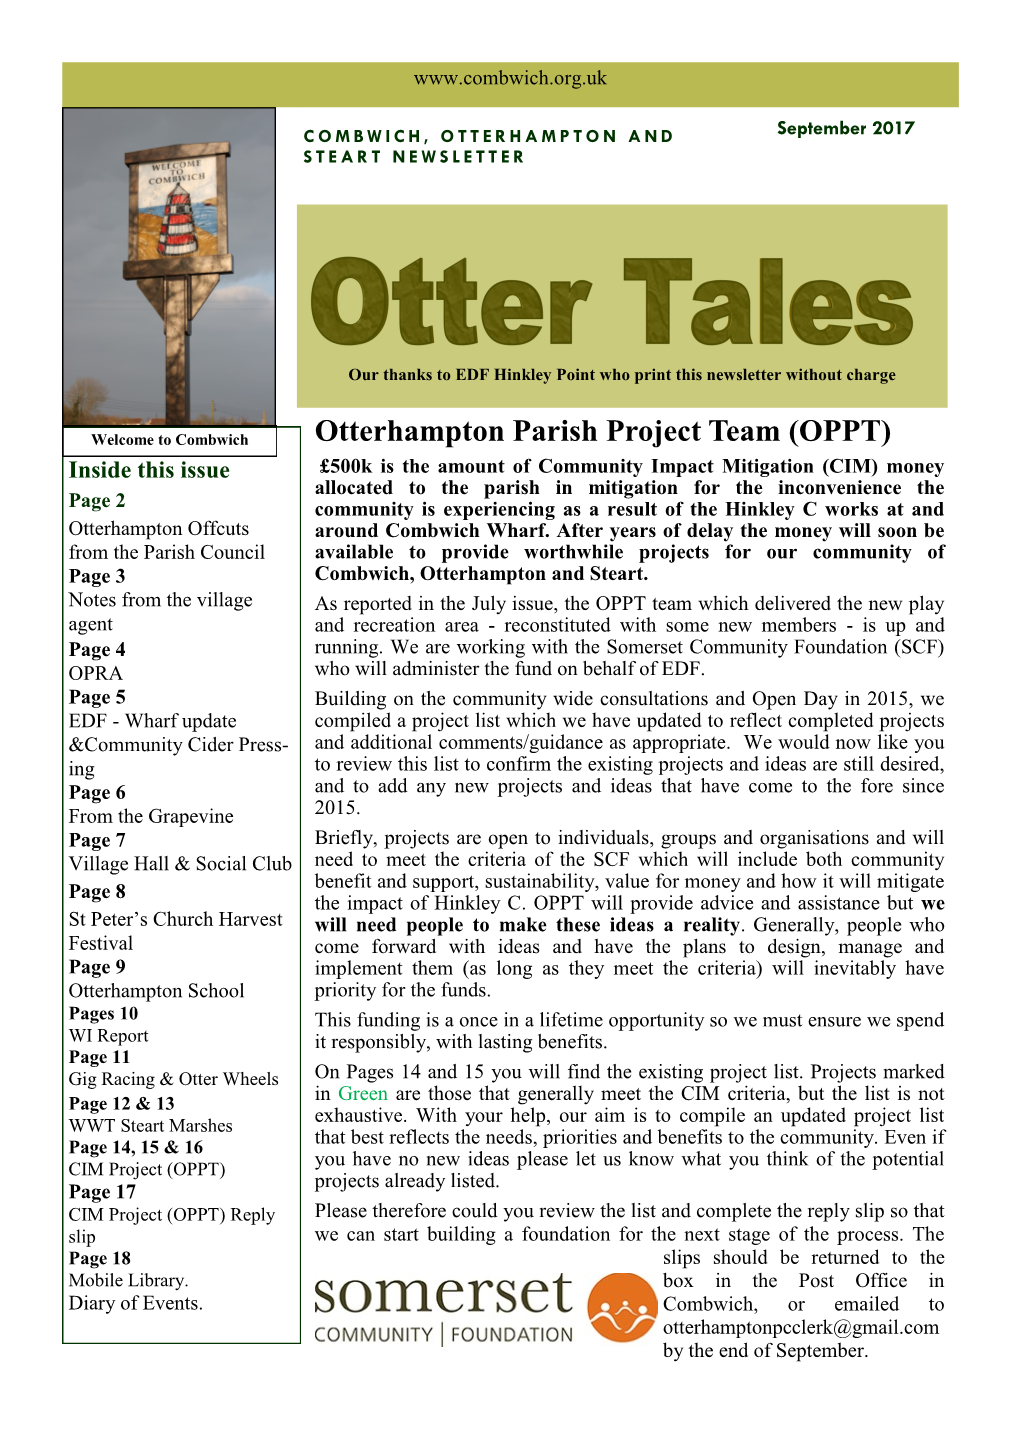 Otterhampton Parish Project Team (OPPT) Inside This Issue £500K Is the Amount of Community Impact Mitigation (CIM) Money